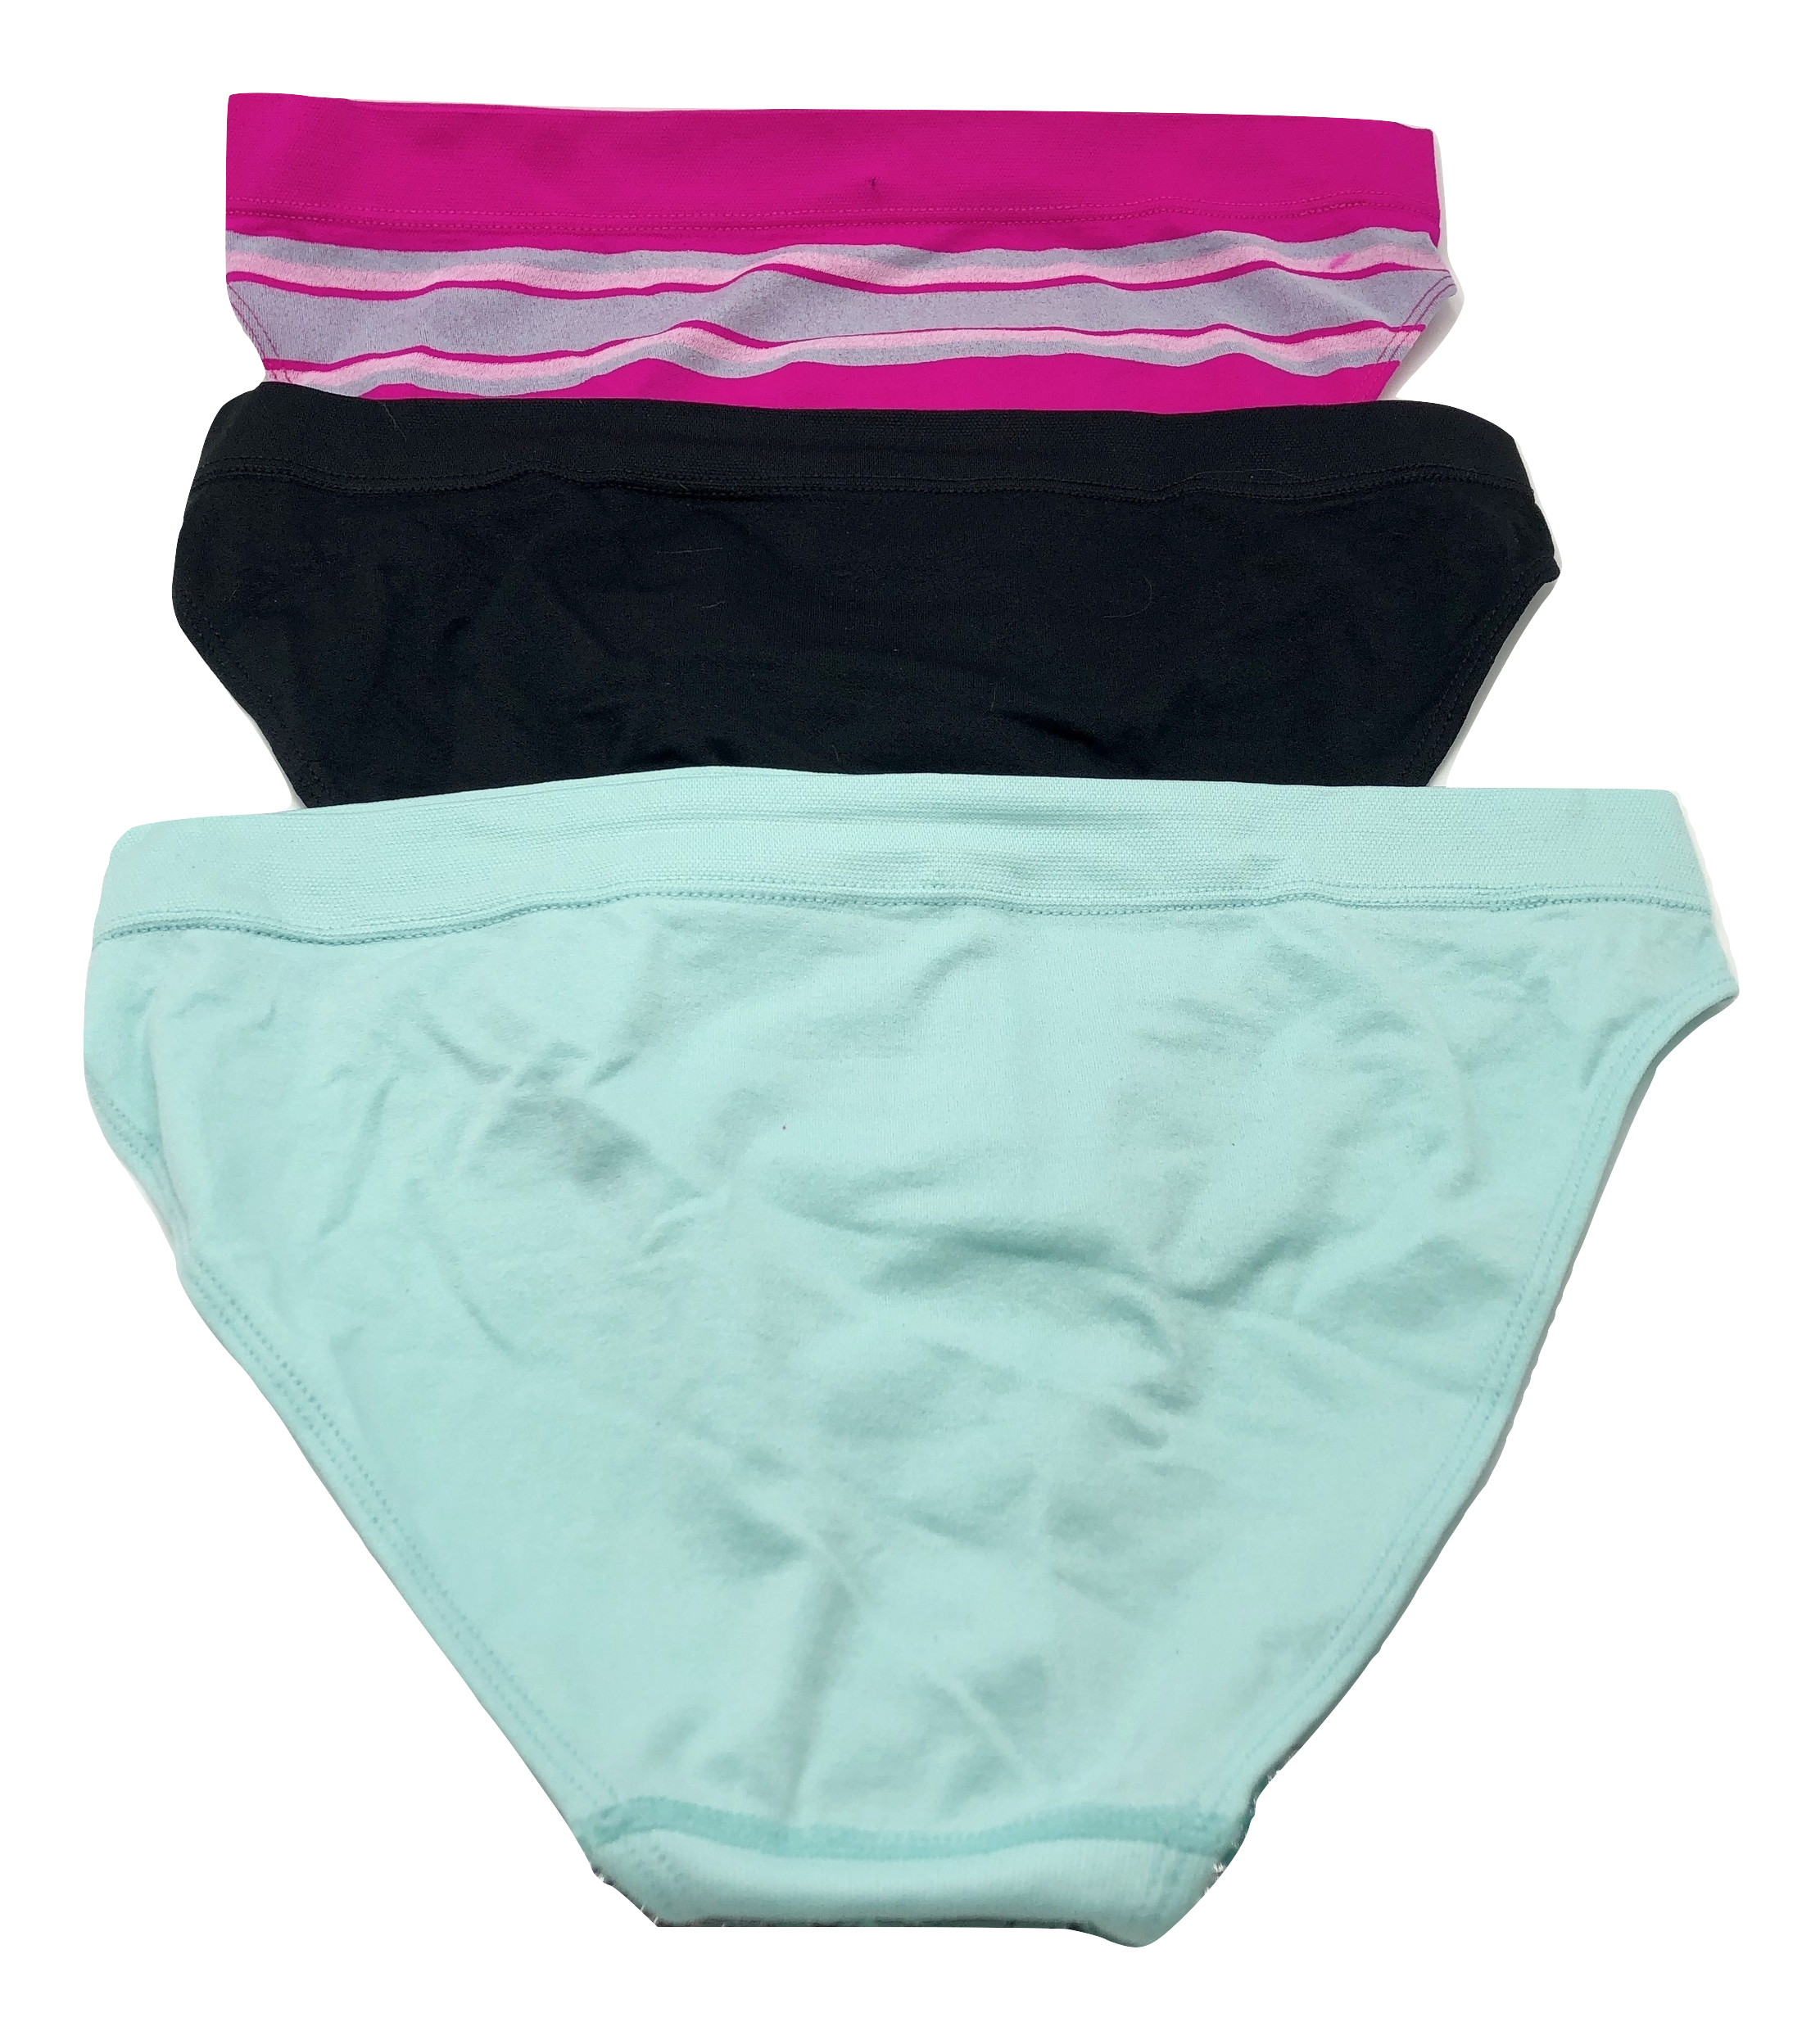 NEW! Umbro Women's Seamless Bikini Panties 3 Pack - Pink/Black Assorted ...